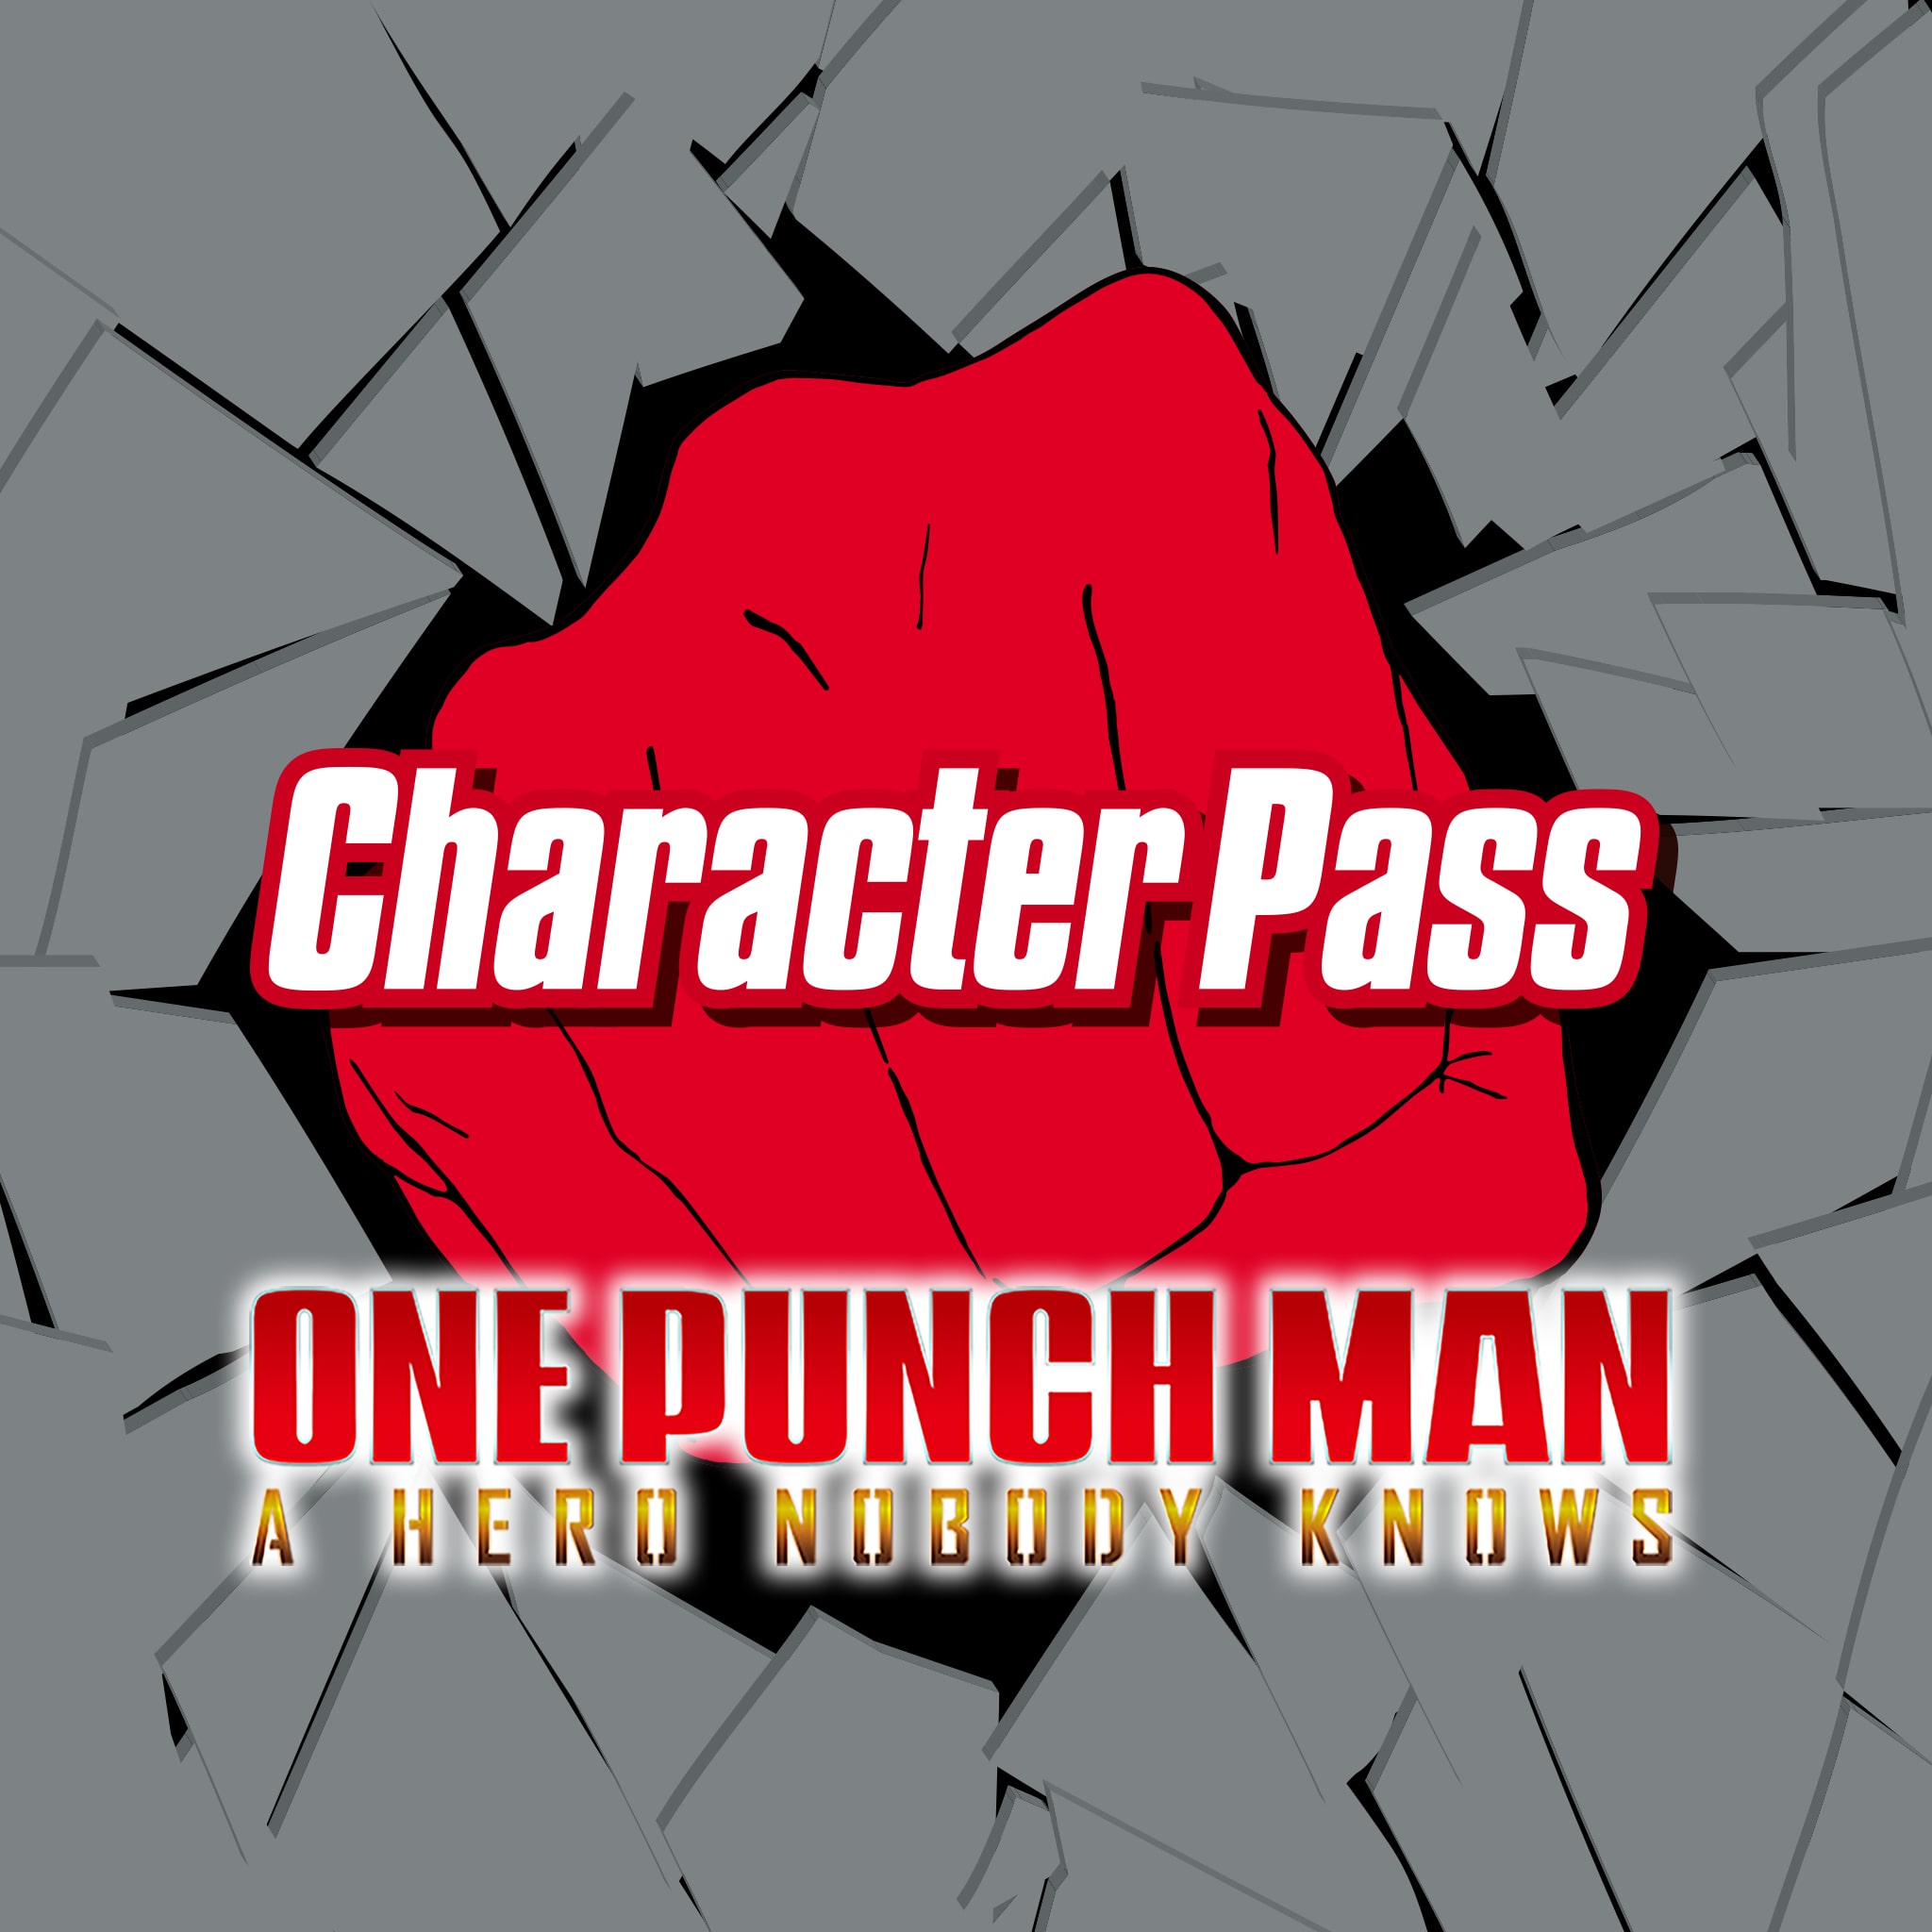 ONE PUNCH MAN: A HERO NOBODY KNOWS pase de personaje